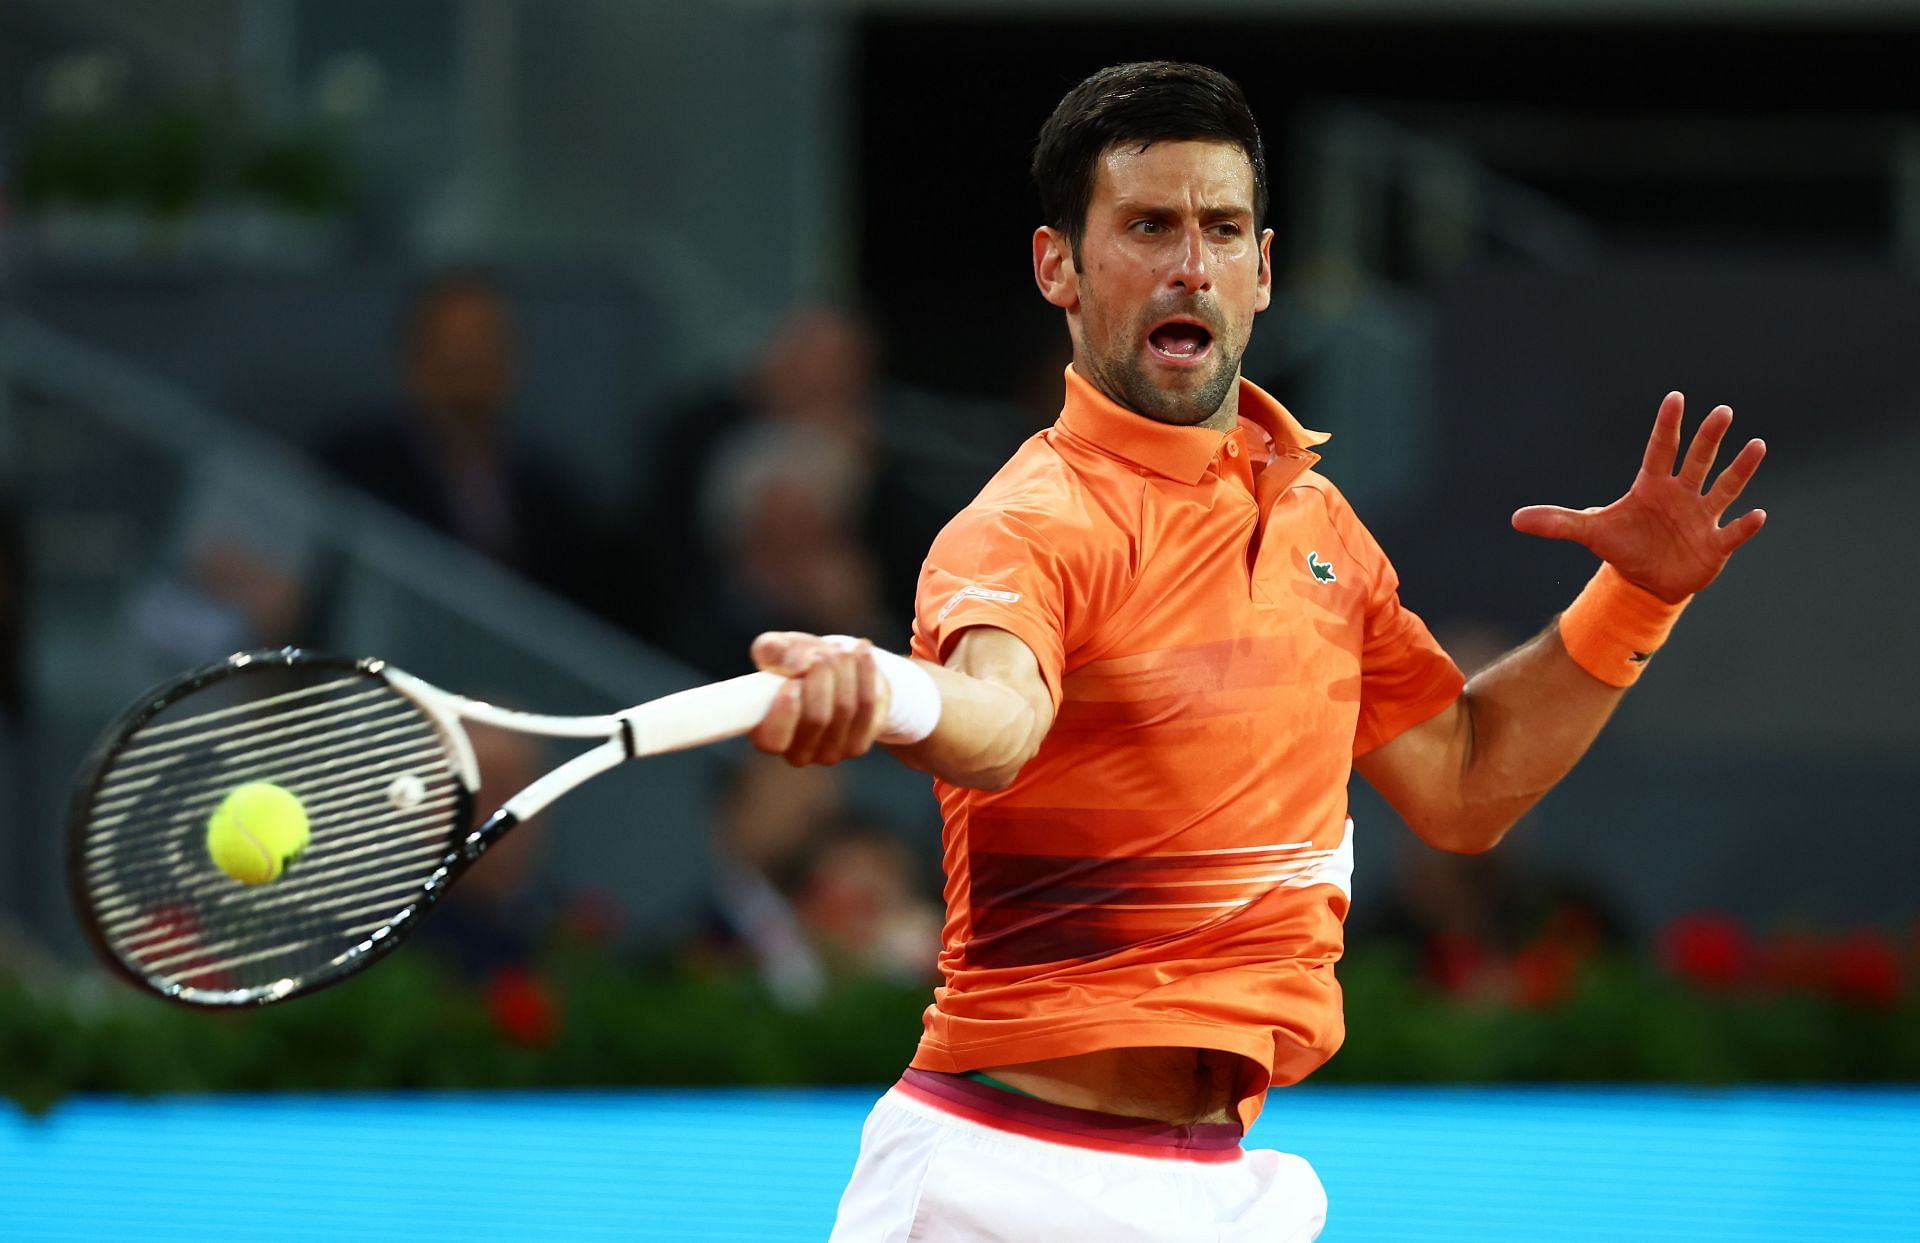 Novak Djokovic beat Gael Monfils in straight sets